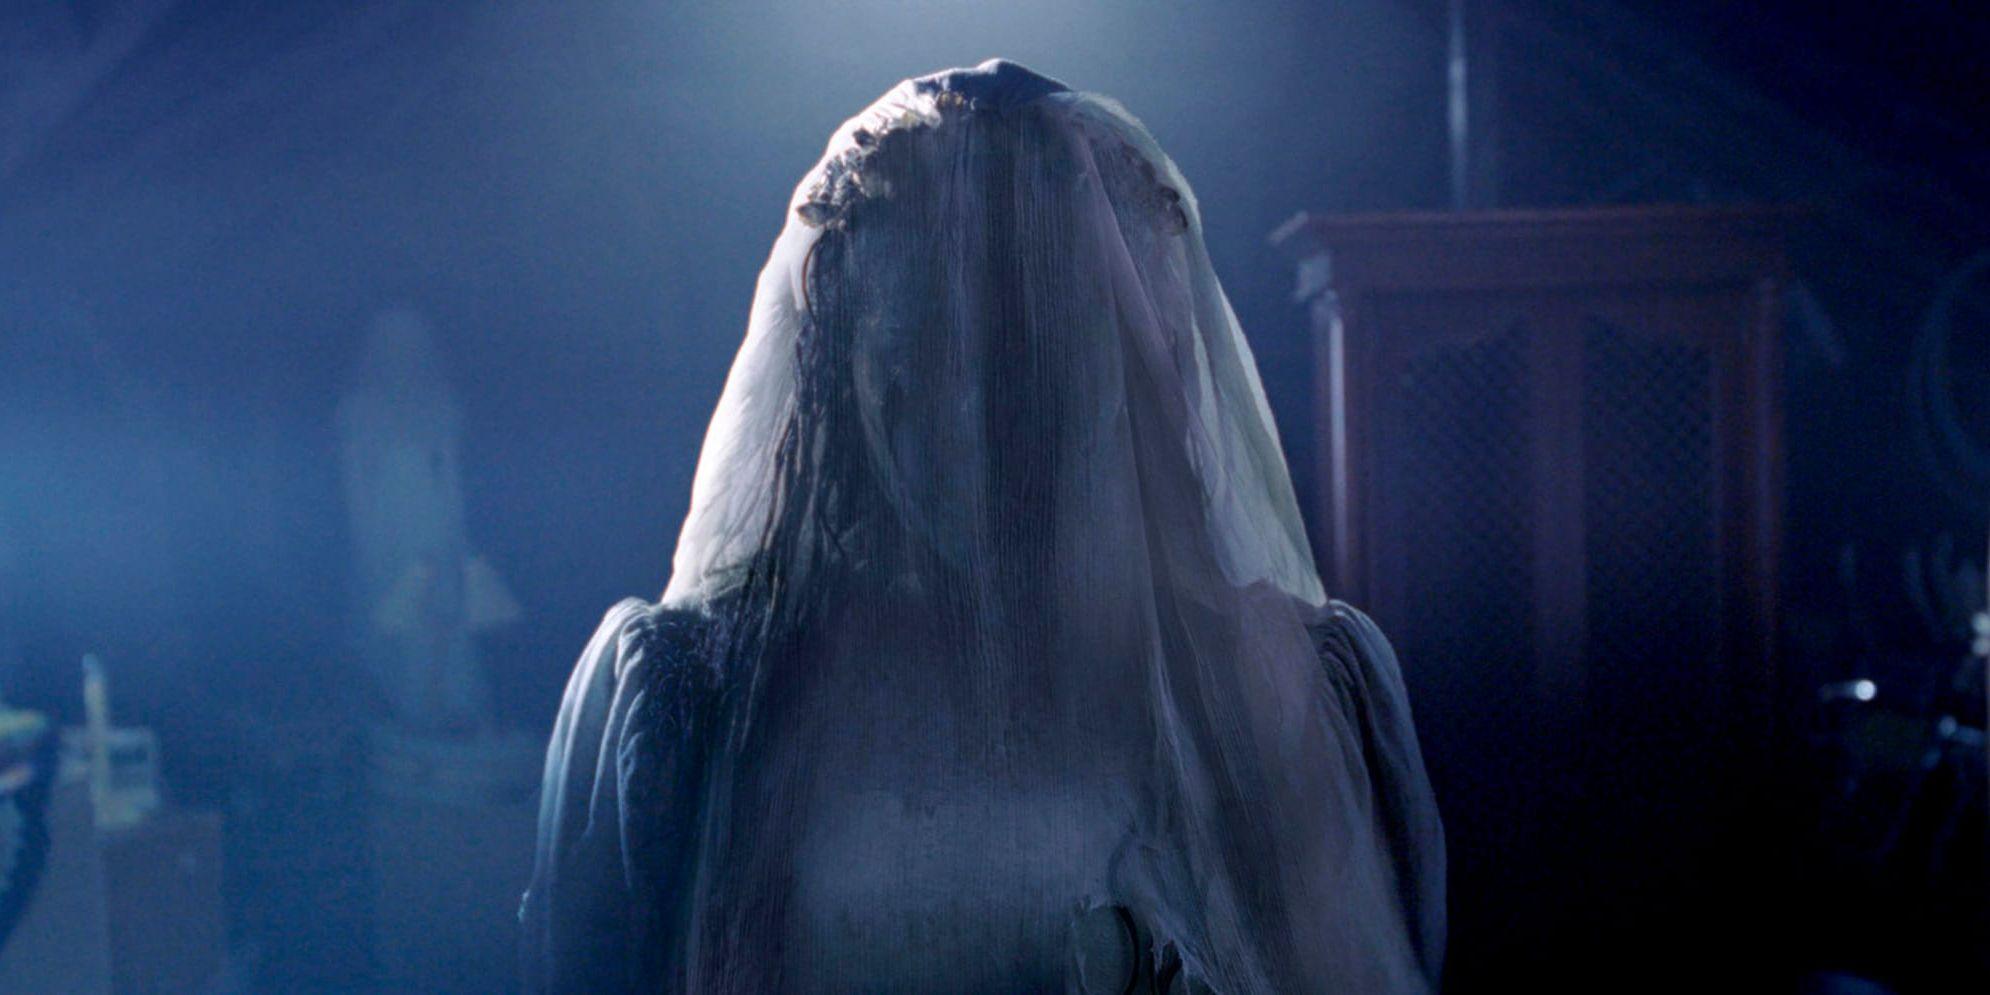 Marisol Ramirez spelar hämndlystet spöke i "The curse of la Llorona". Pressbild.